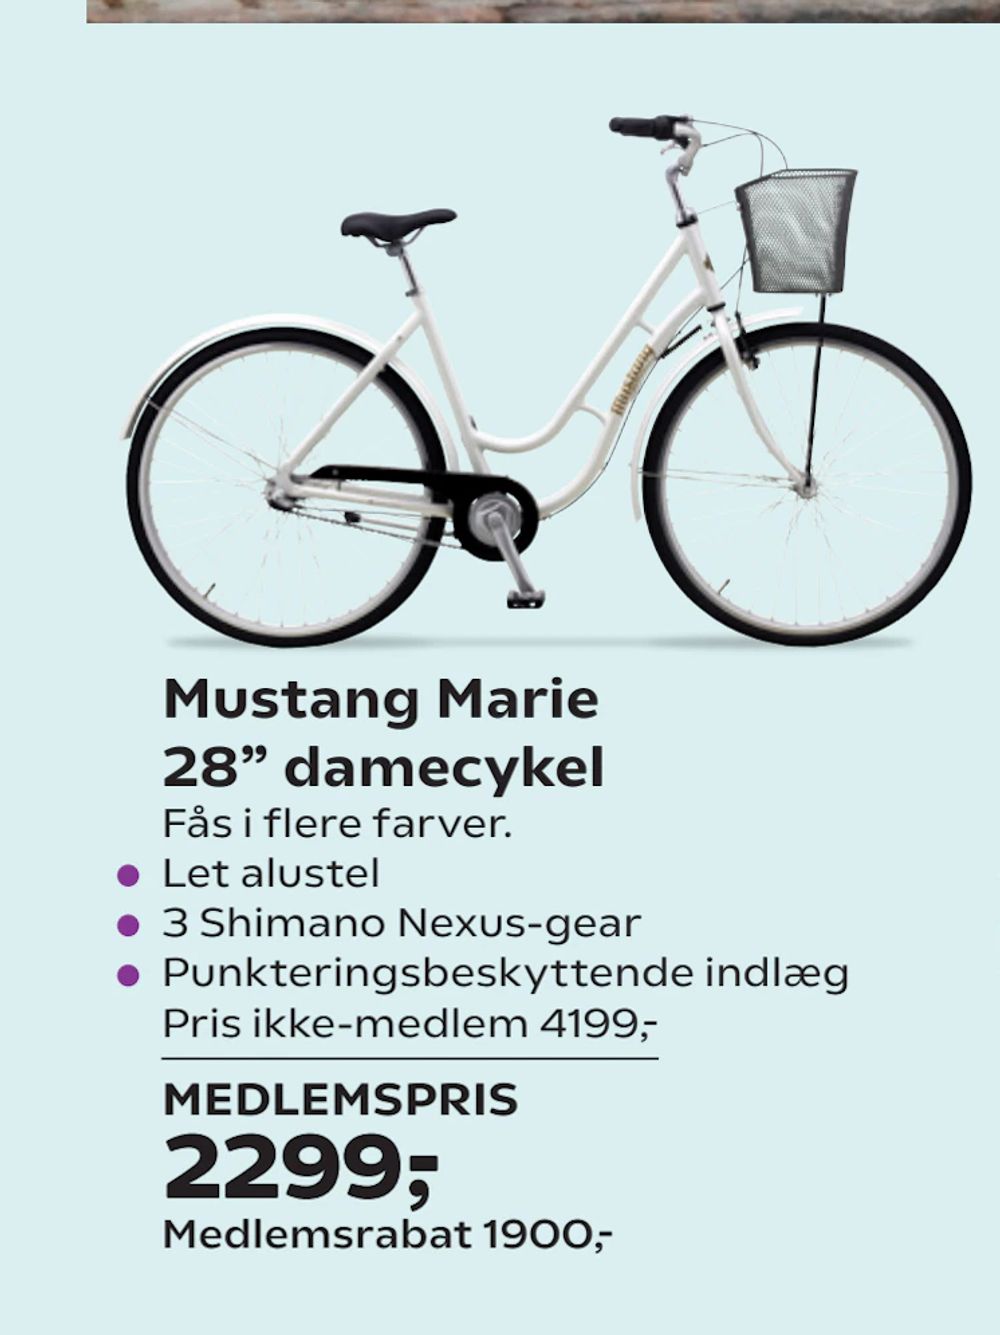 Tilbud på Mustang Marie 28” damecykel fra Coop.dk til 2.299 kr.